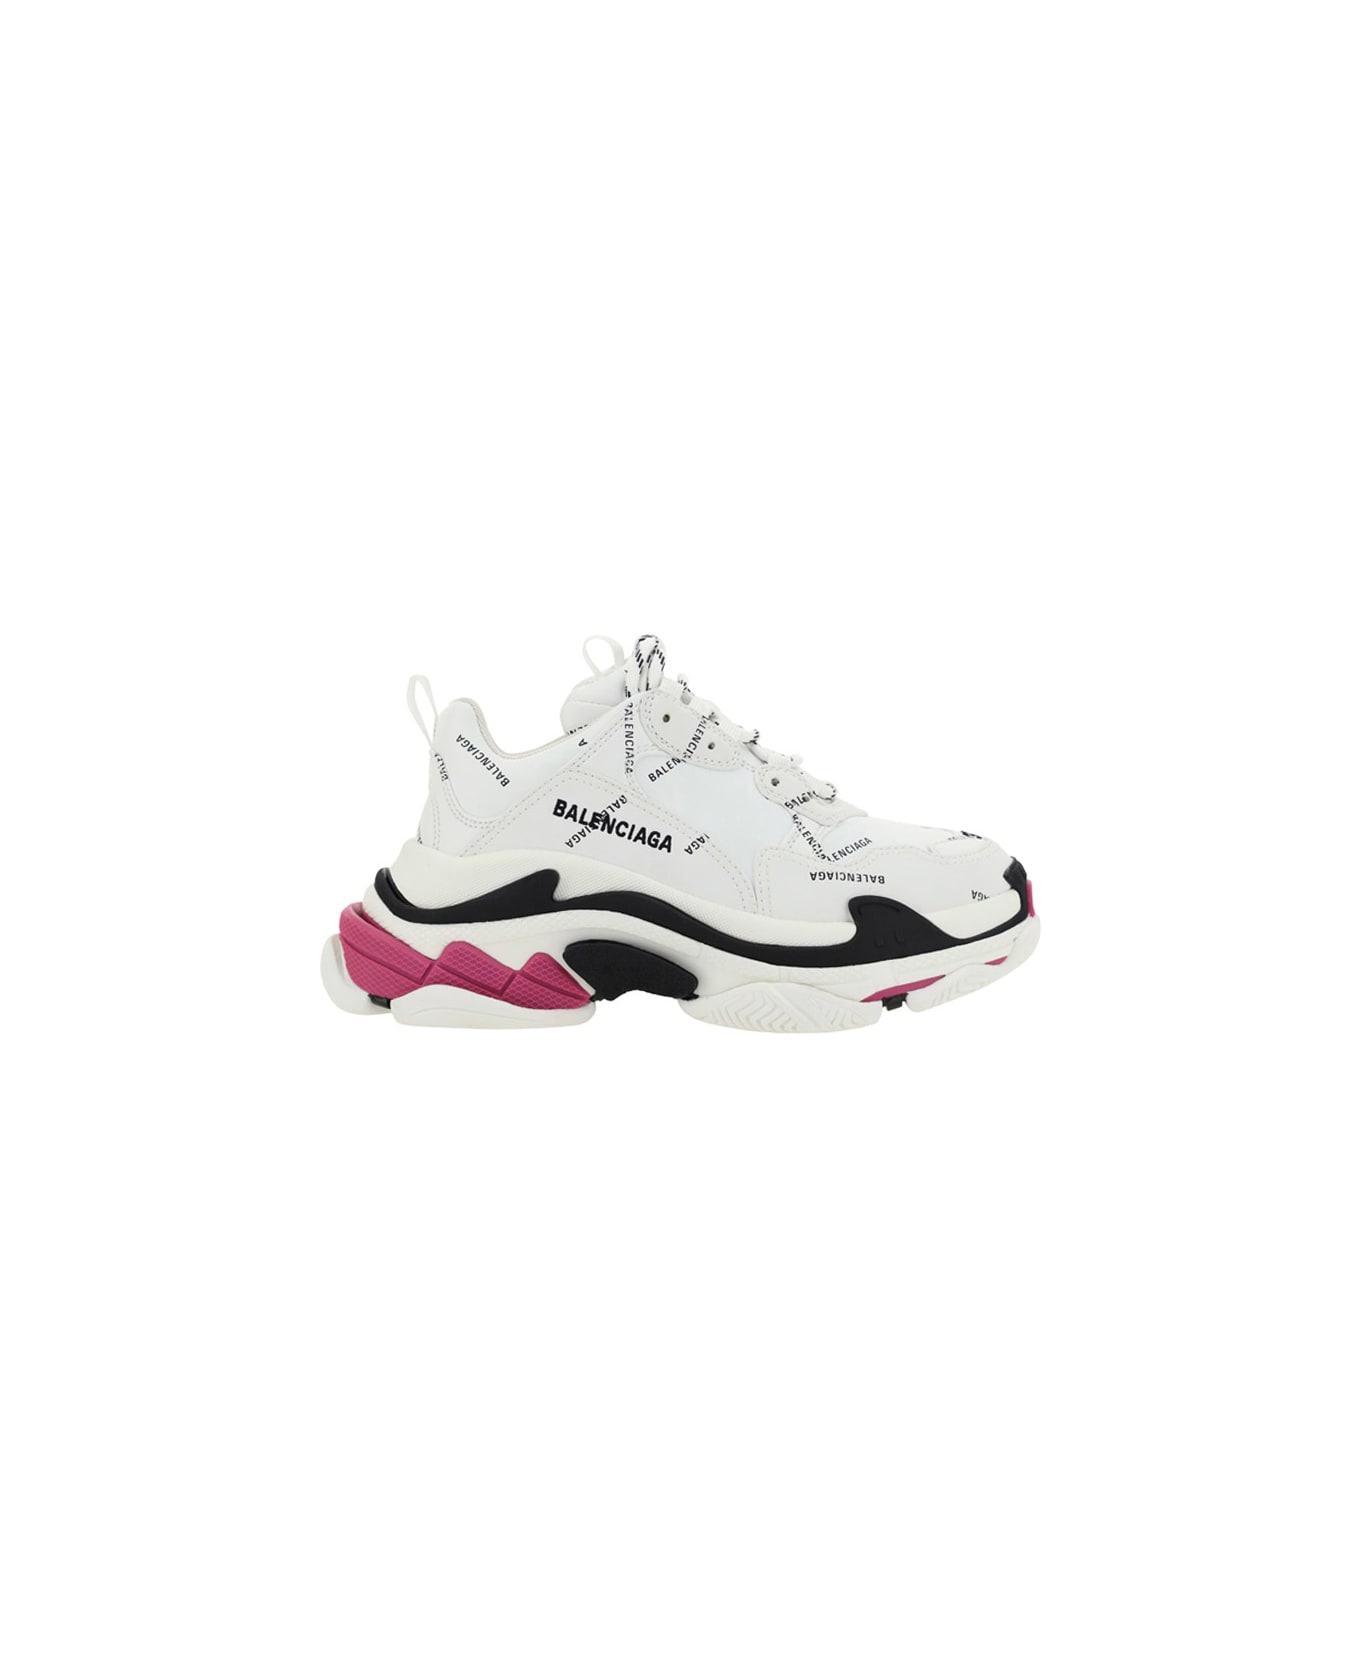 Balenciaga Triple S Sneakers - White/blk/fluo pink